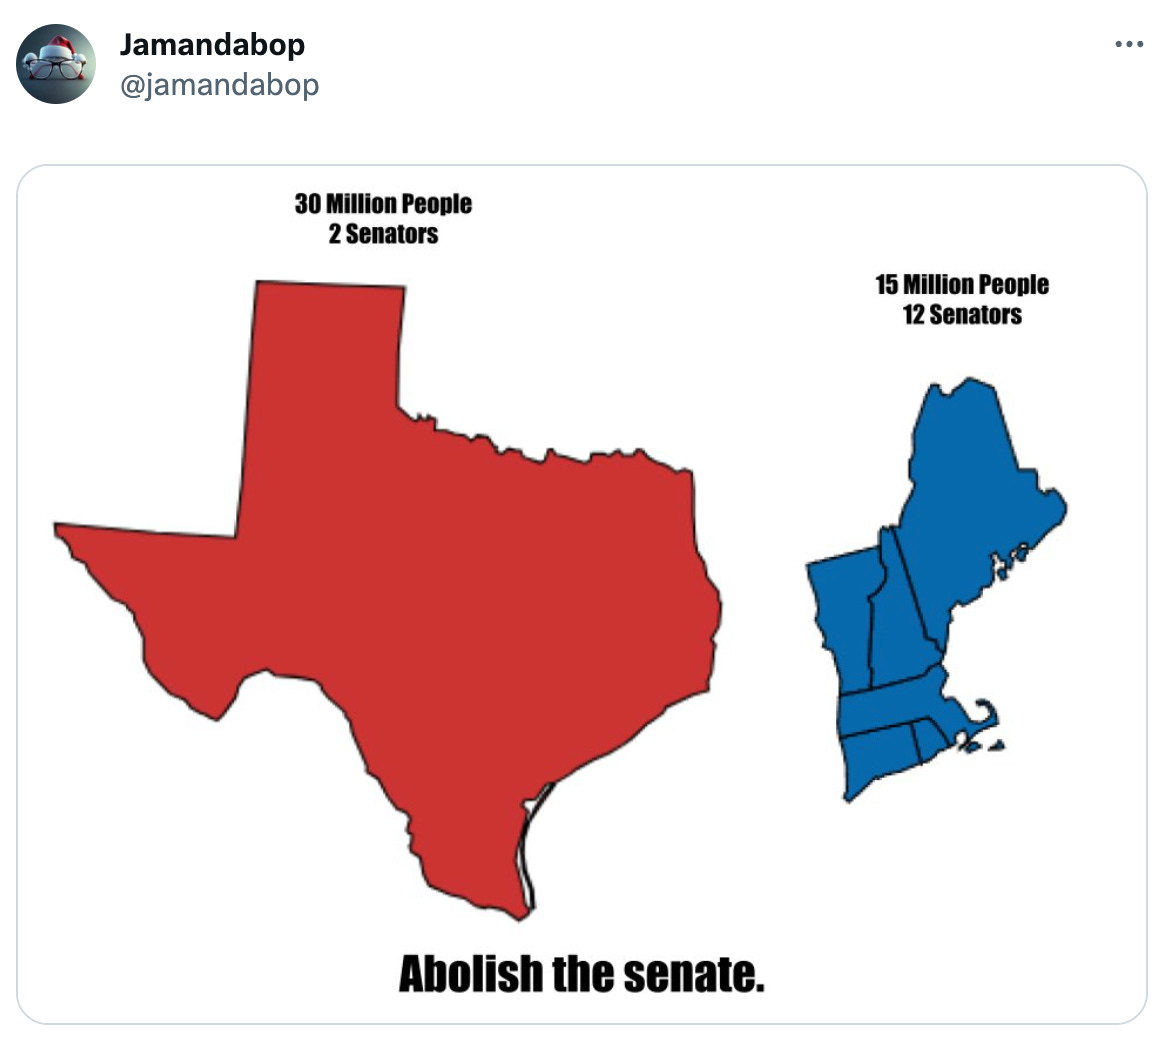 Abolish the Senate